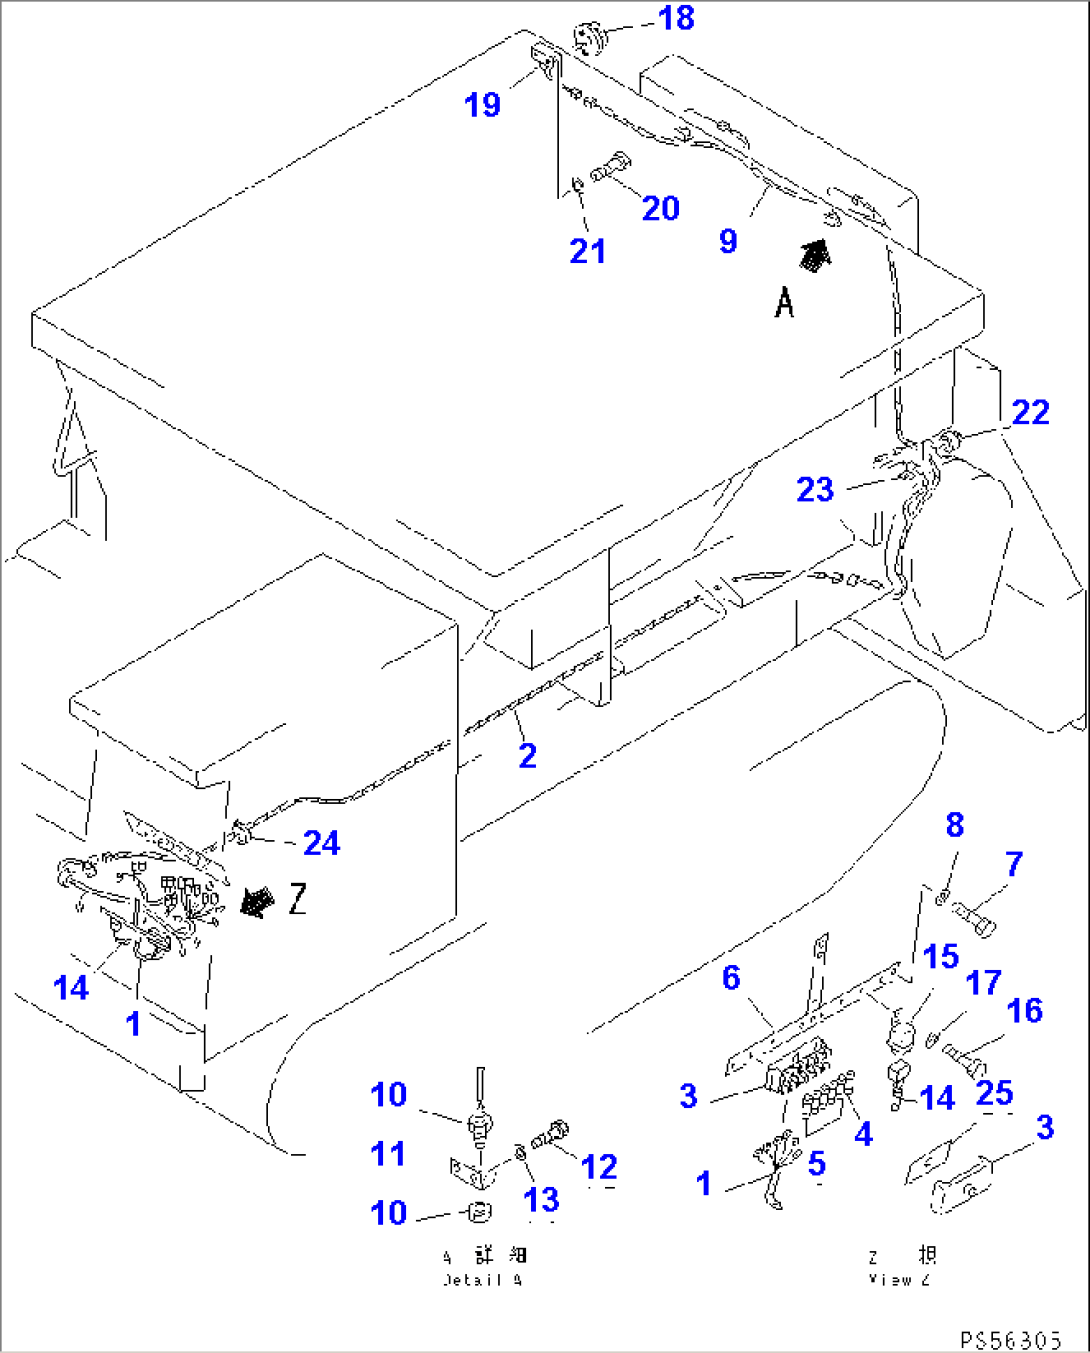 ELECTRICAL SYSTEM (GATE SENSOR)(#1025-1030)